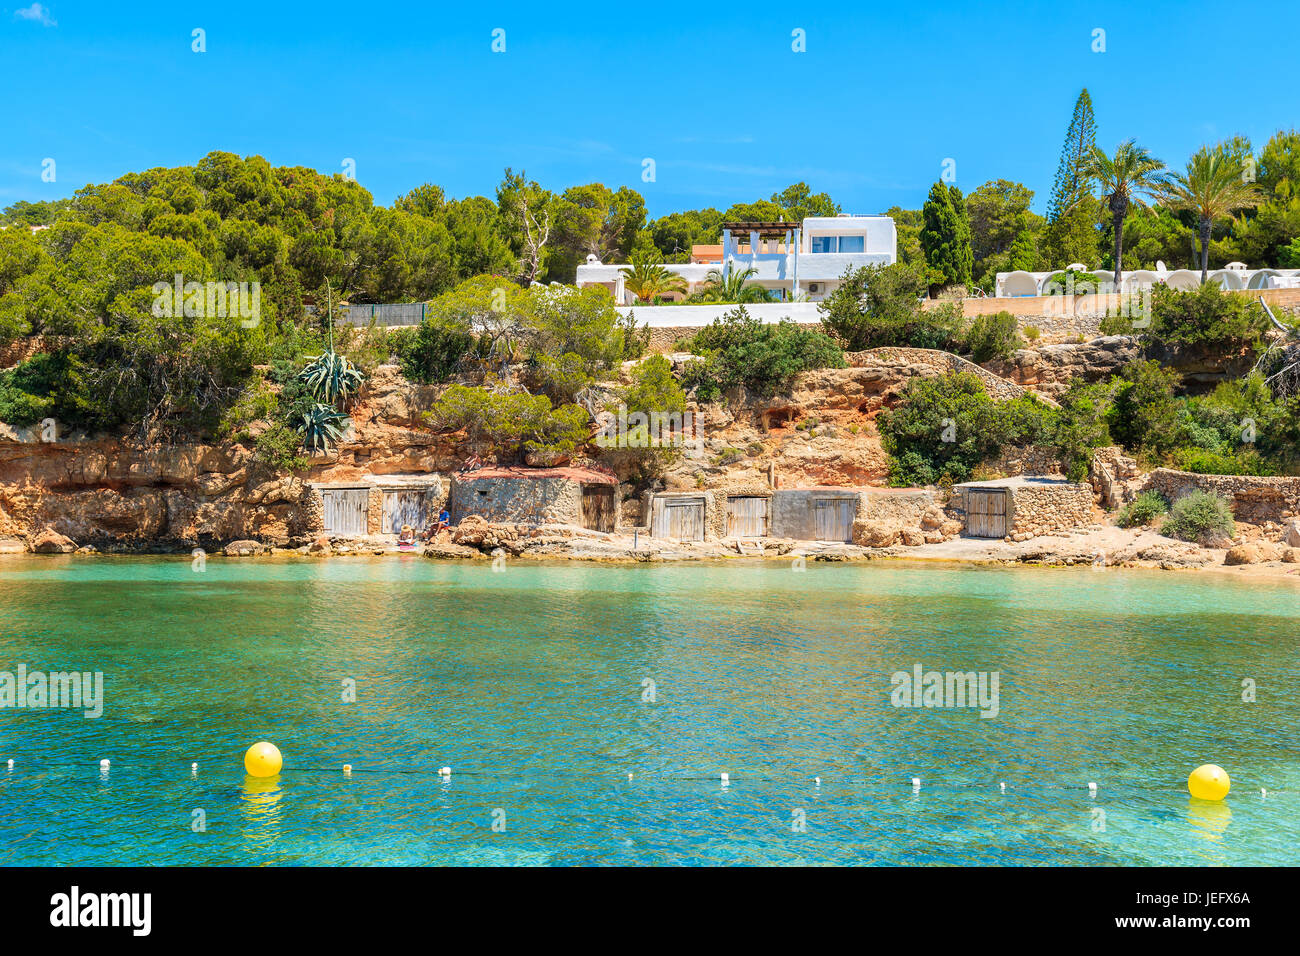 Typical white house on coast of Cala Gracio bay, Ibiza island, Spain Stock Photo